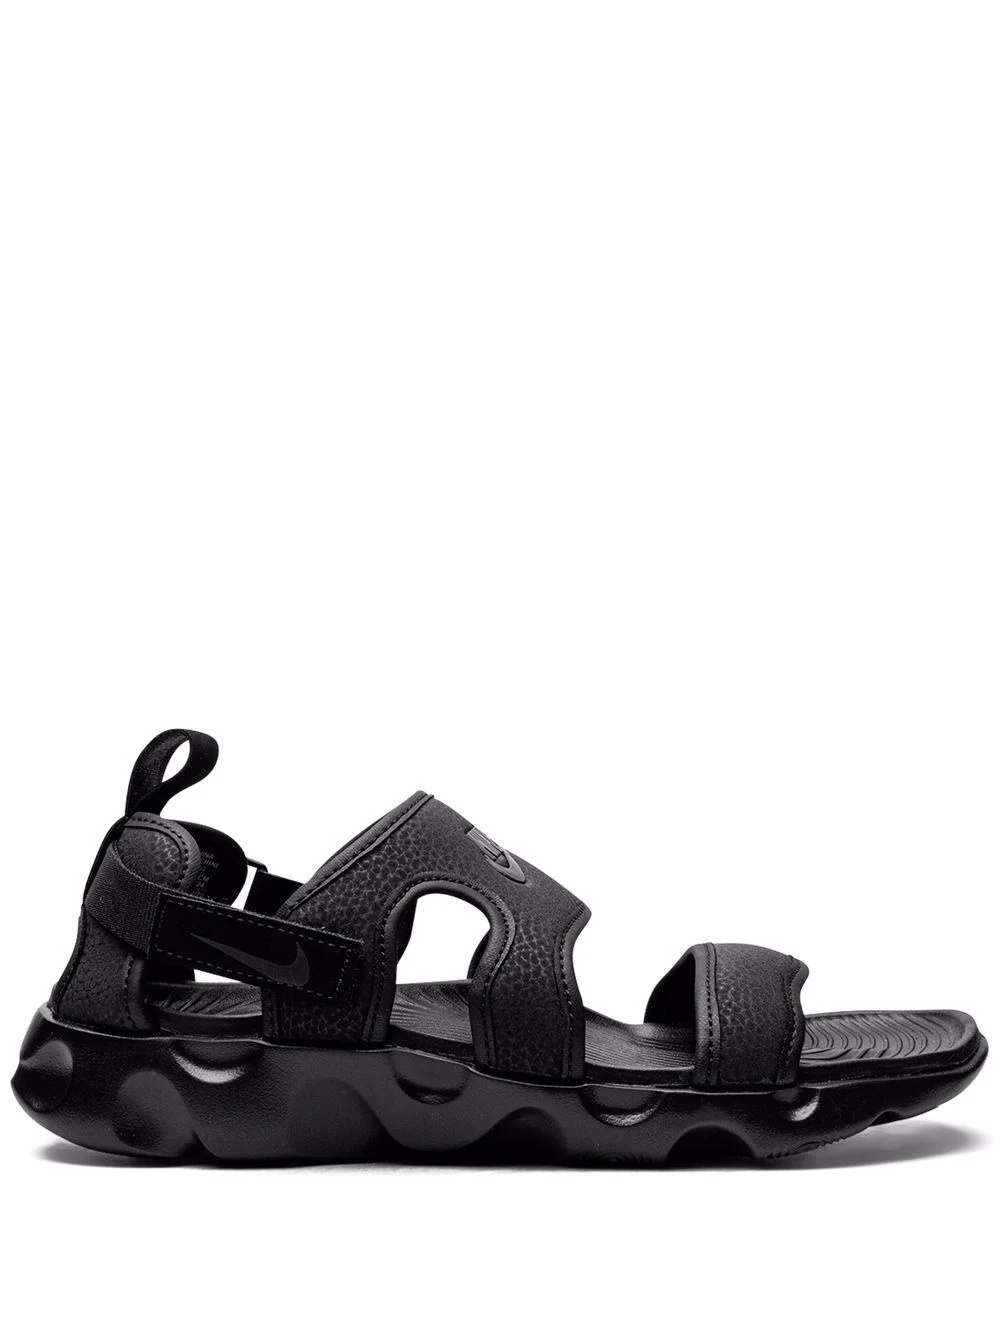 Owaysis sandals "Triple Black" - 1